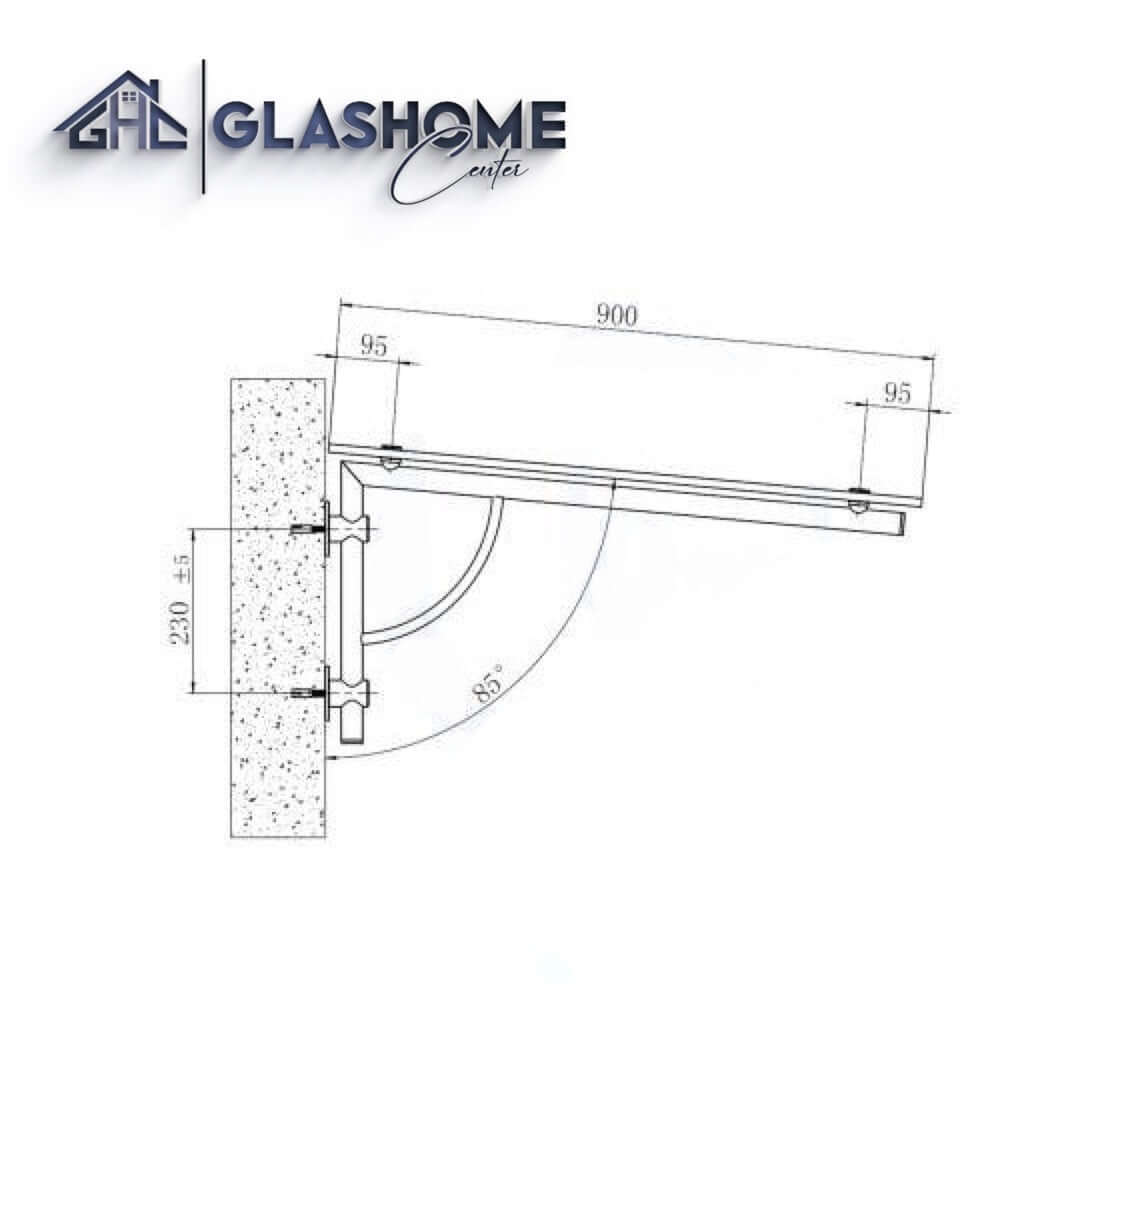 GlasHomeCenter - glass canopy - Clear glass - 150x90cm - 13.1mm VSG - incl. 2 Edelstahlhalterungen Variant "Athens"